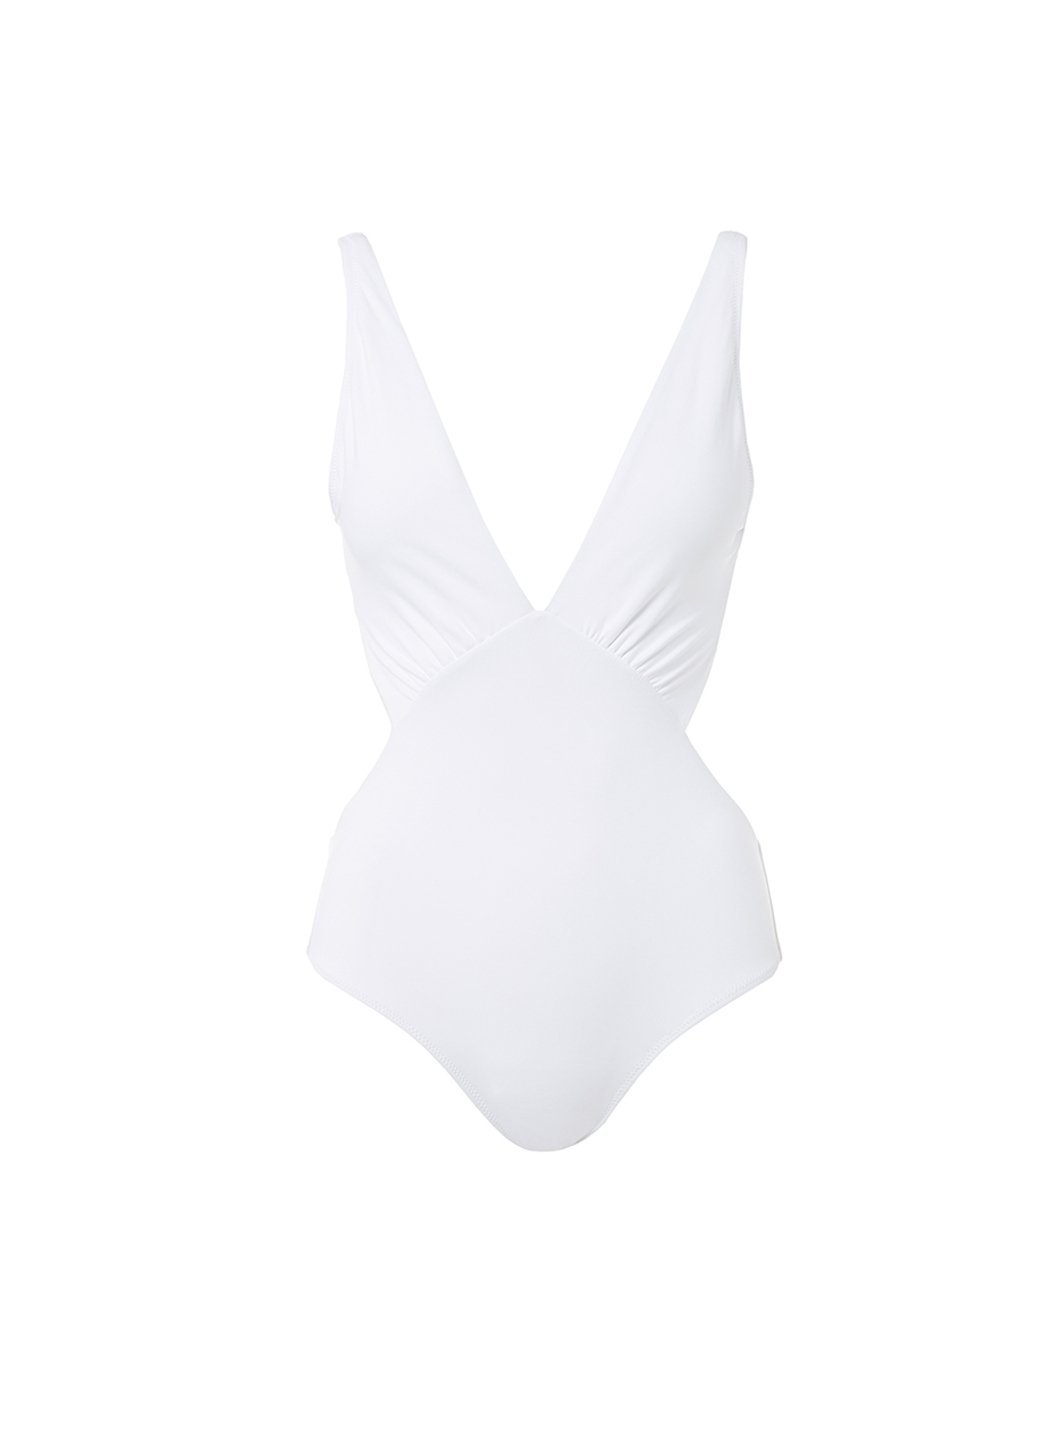 delmar white overtheshoulder vneck cutout onepiece swimsuit 2019